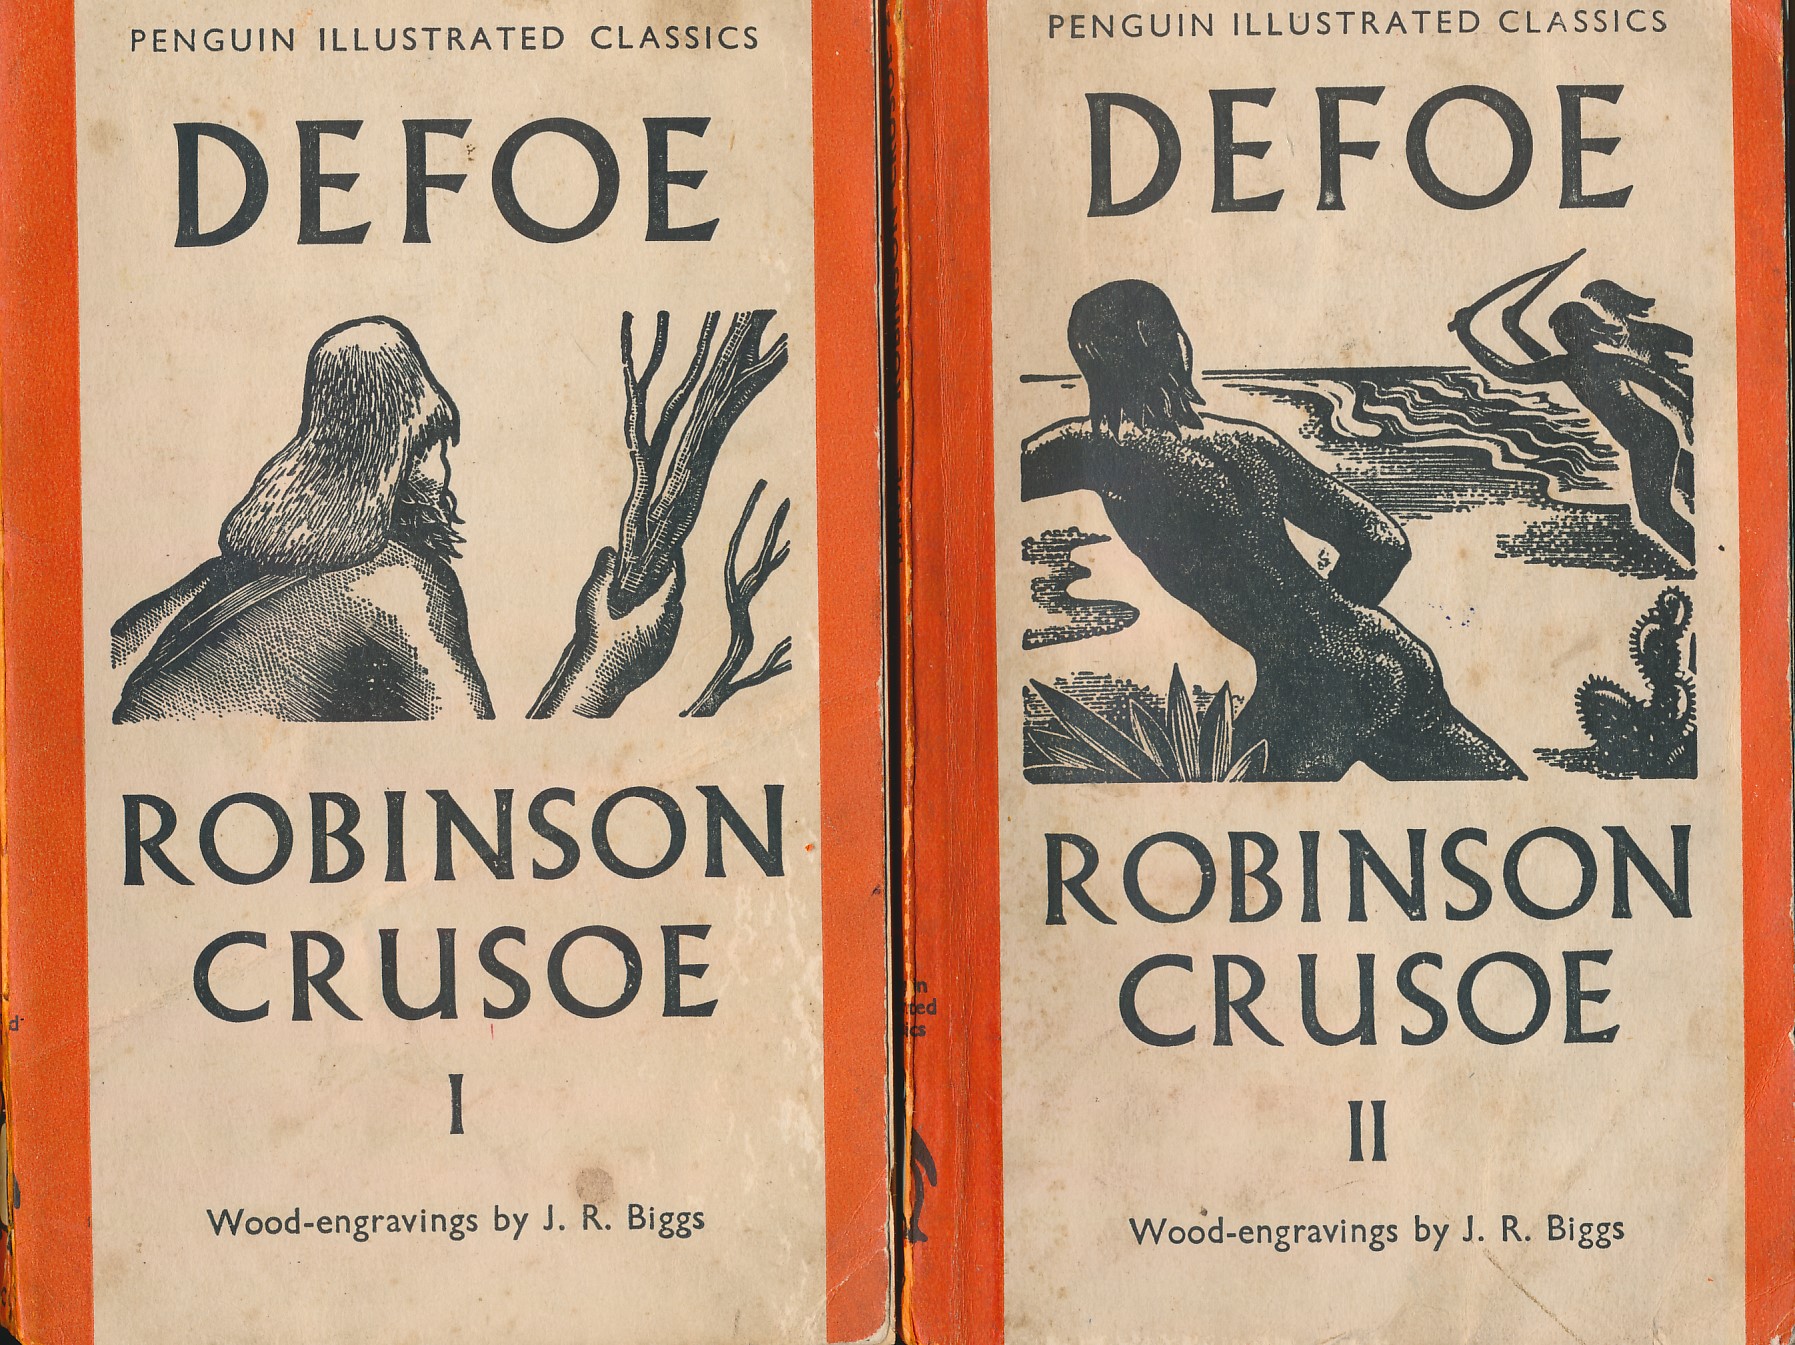 Robinson Crusoe. Two volume set. Volumes I - II.   Penguin Illustrated Classics No. C6 and C7.